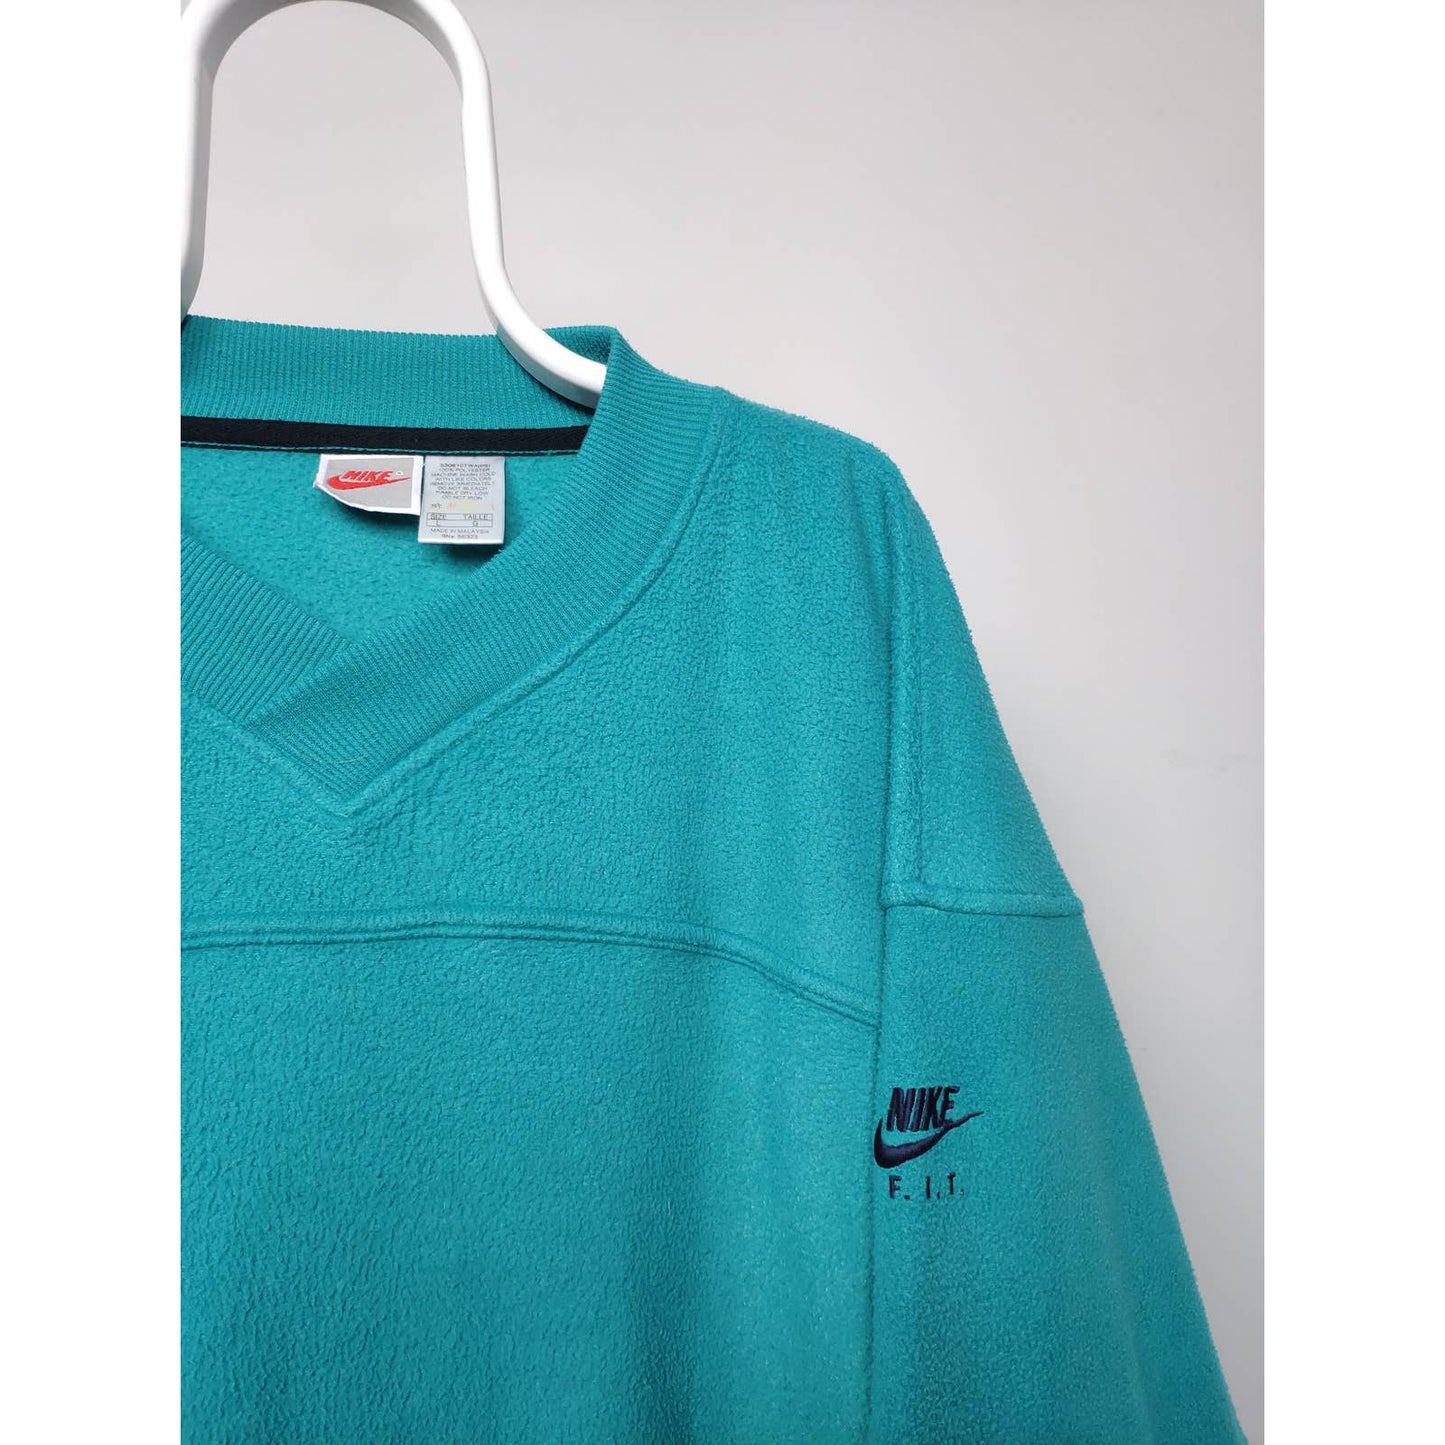 Nike FIT vintage vneck fleece sweatshirt green 80s 90s RARE